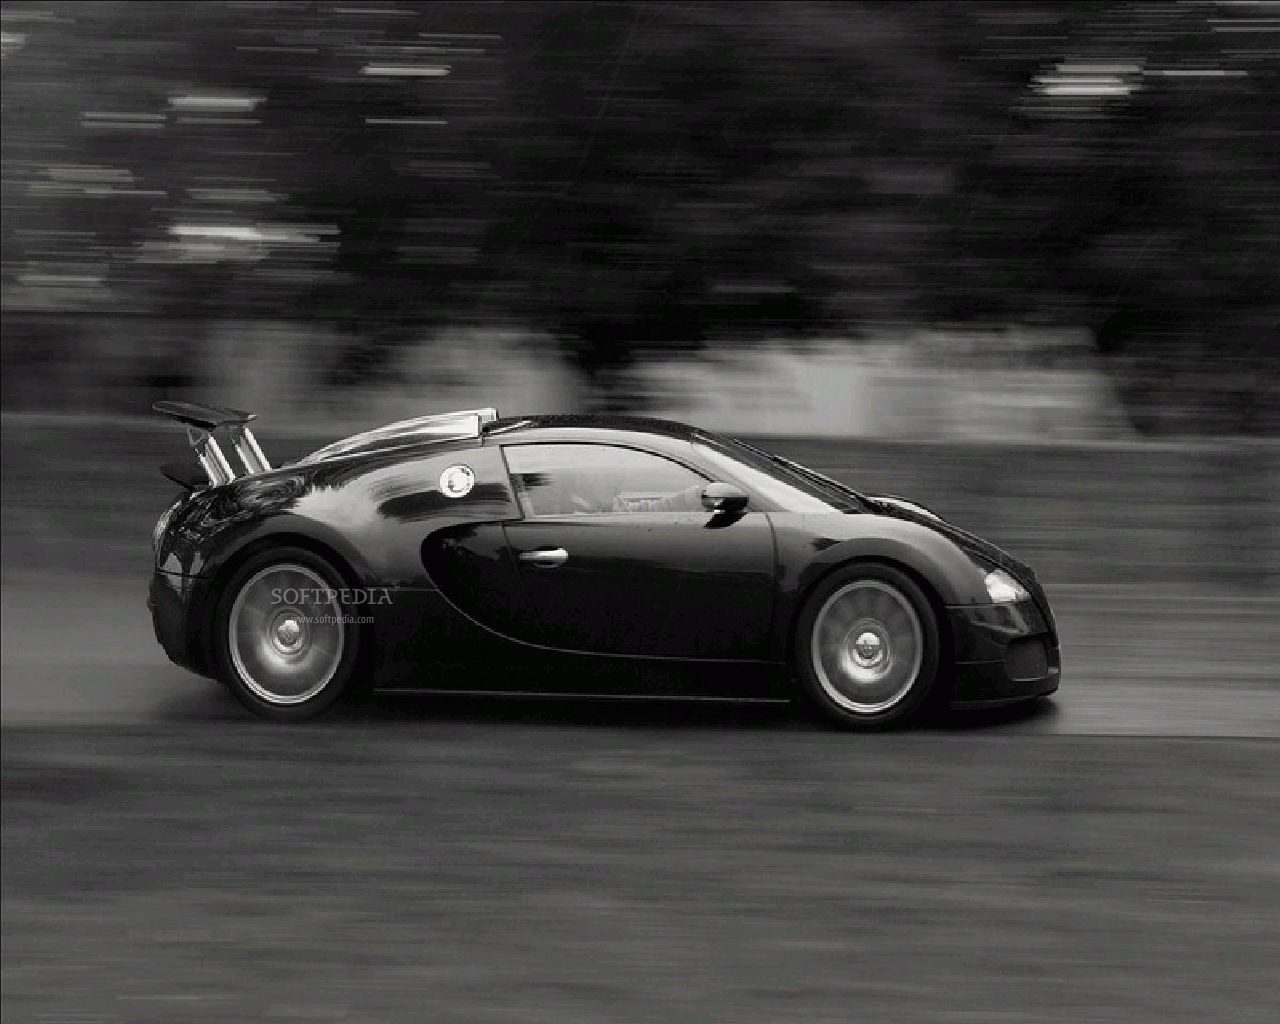 "Freebking Bugatti Screensaver